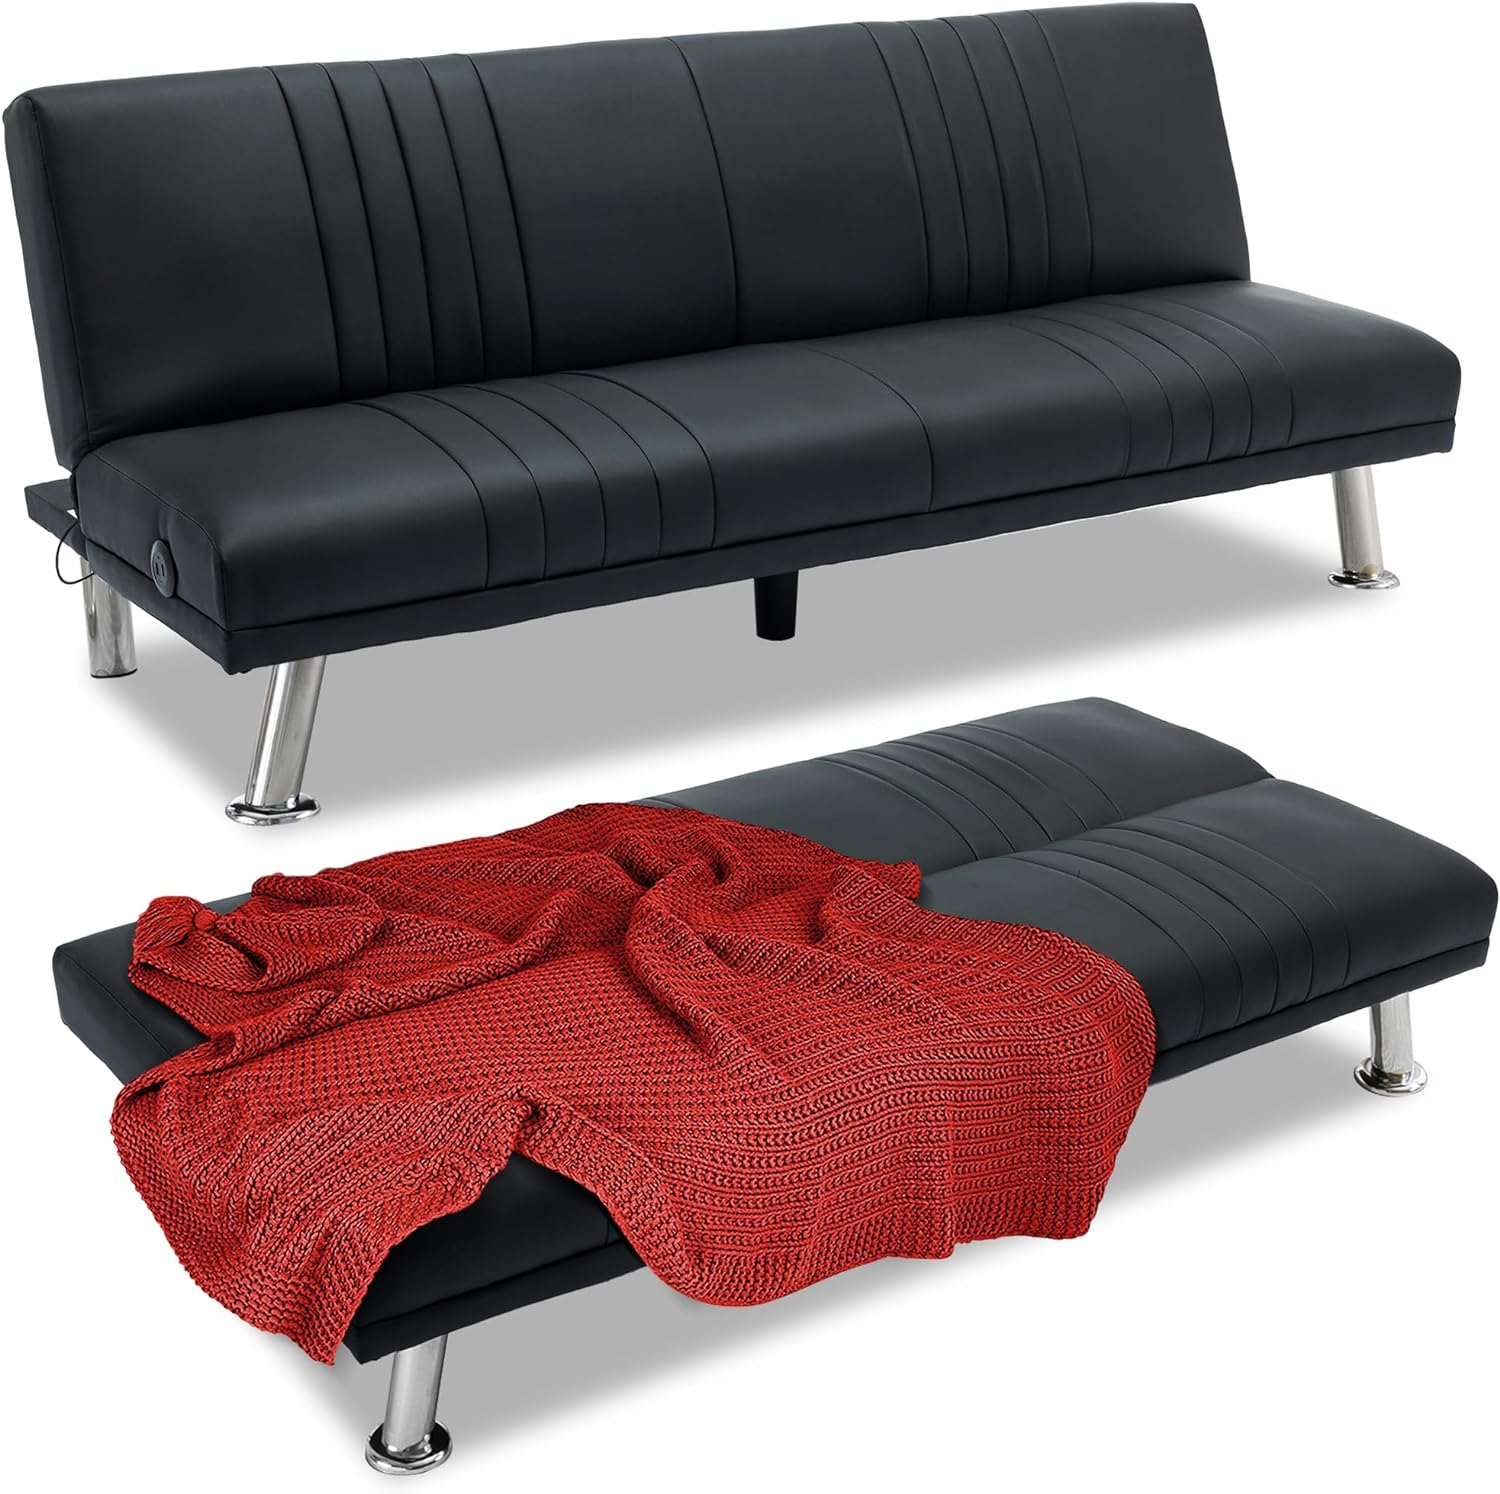 VECELO Modern Convertible Sofa Bed/Folding Sleeper Couch